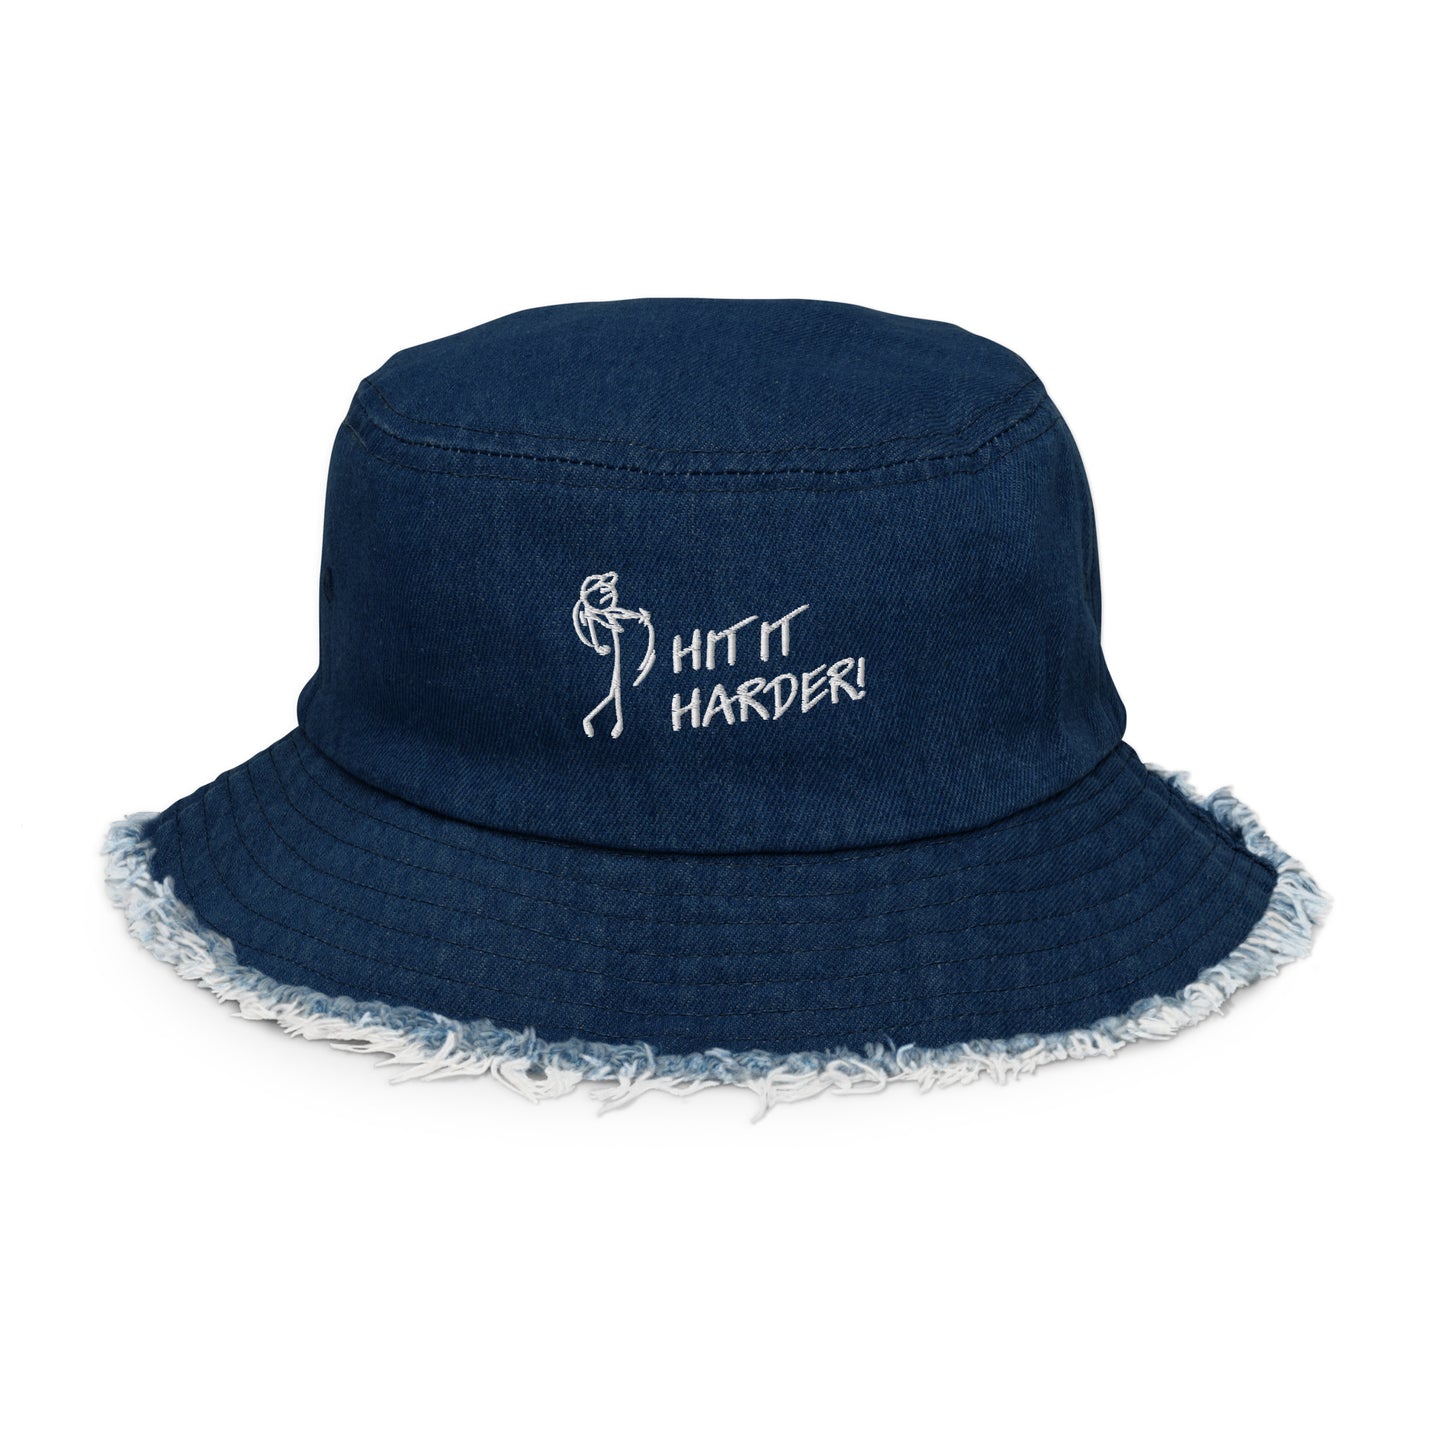 Hit It Harder! Embroidered Men's Bucket Hat